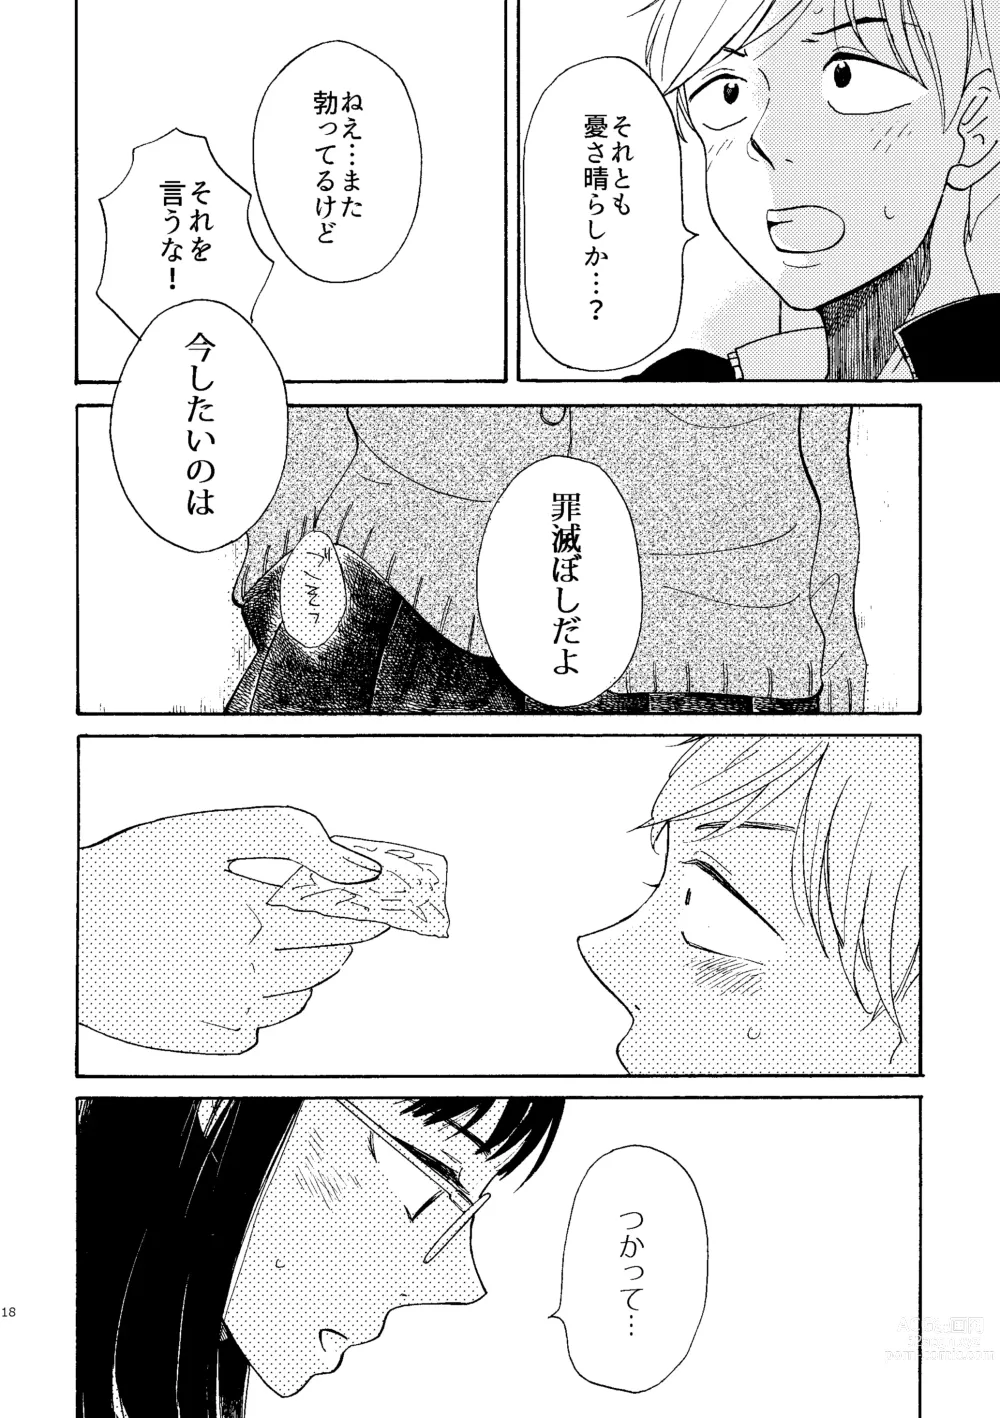 Page 18 of doujinshi Ibitsu na Junjou